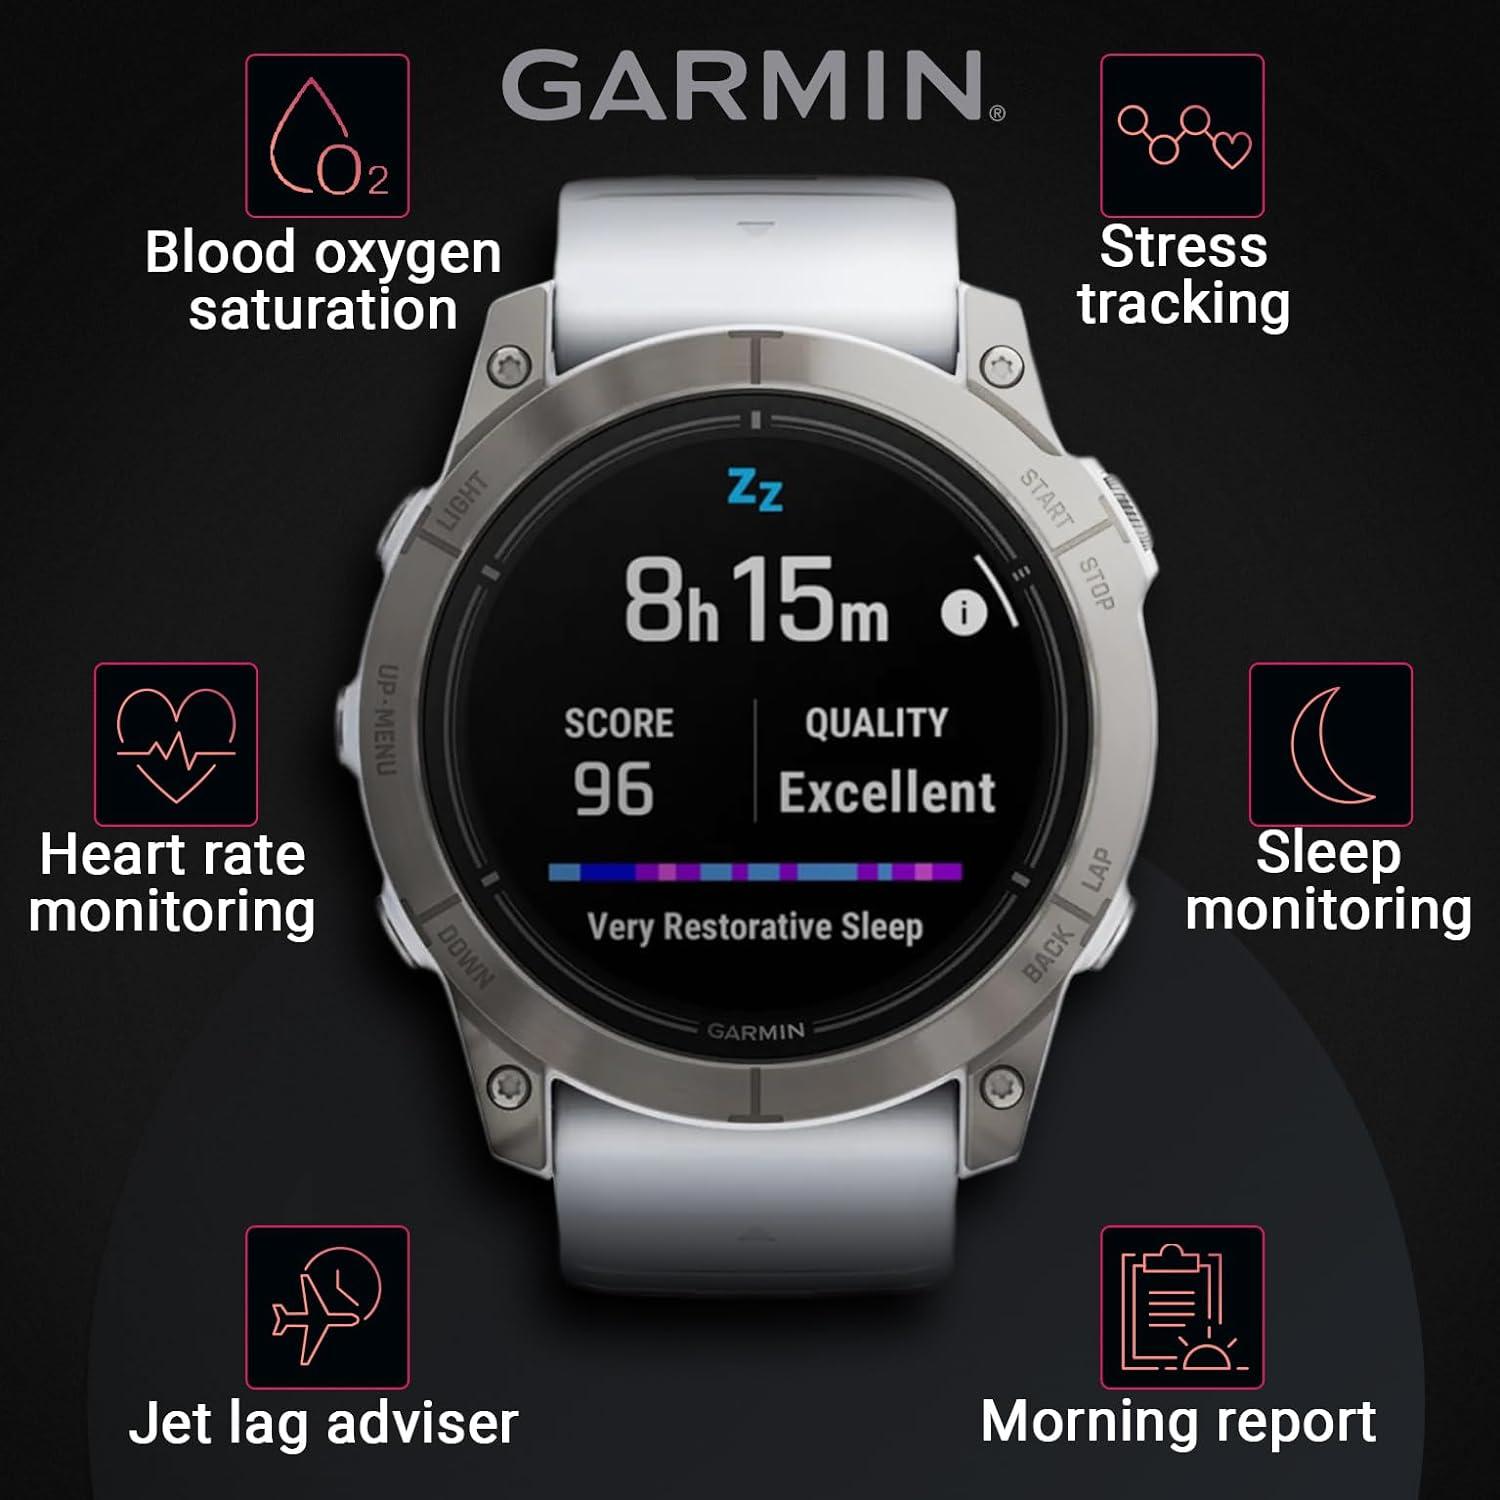  Garmin epix Pro (Gen 2) Sapphire Edition, 47mm, High  Performance Smartwatch, Advanced Training Technology, Built-in Flashlight,  Whitestone : Electronics